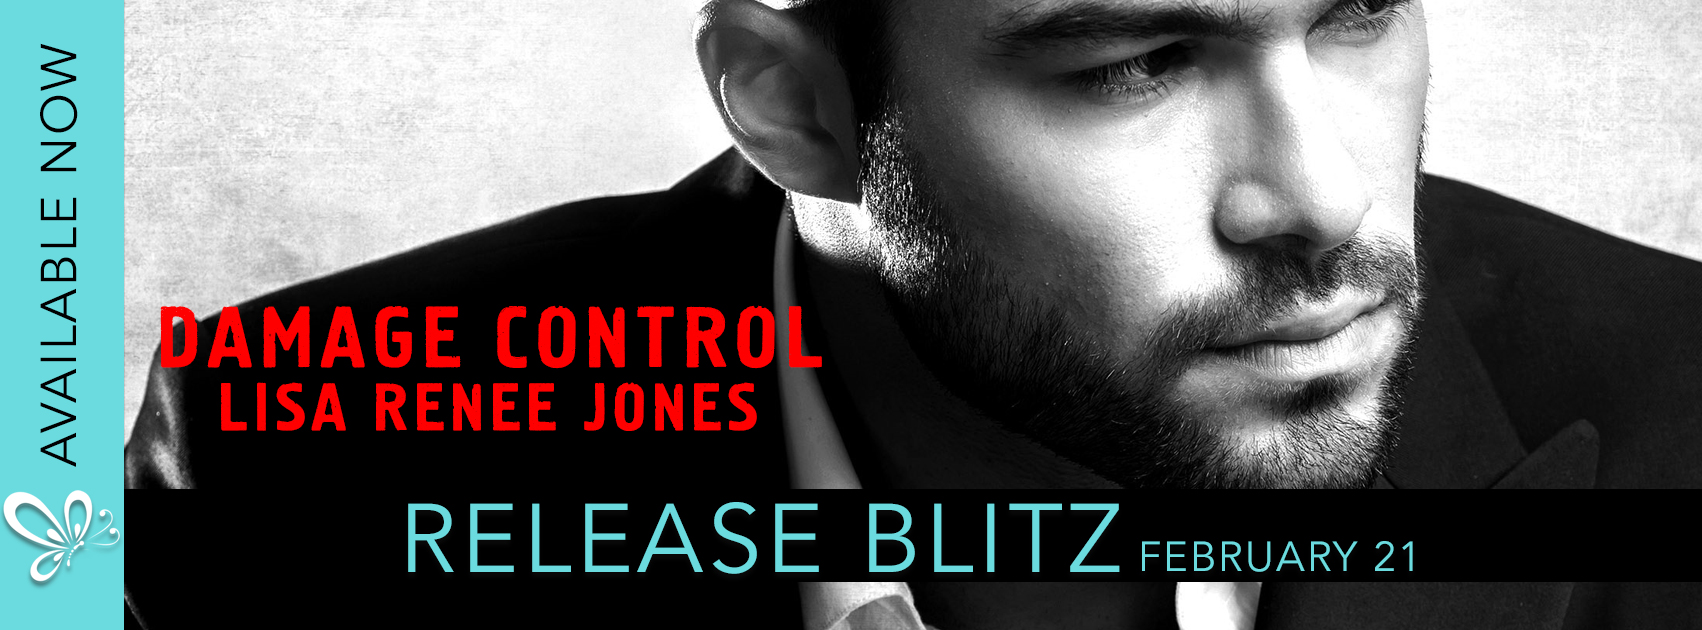 Damage Control by Lisa Renee Jones Release Blitz